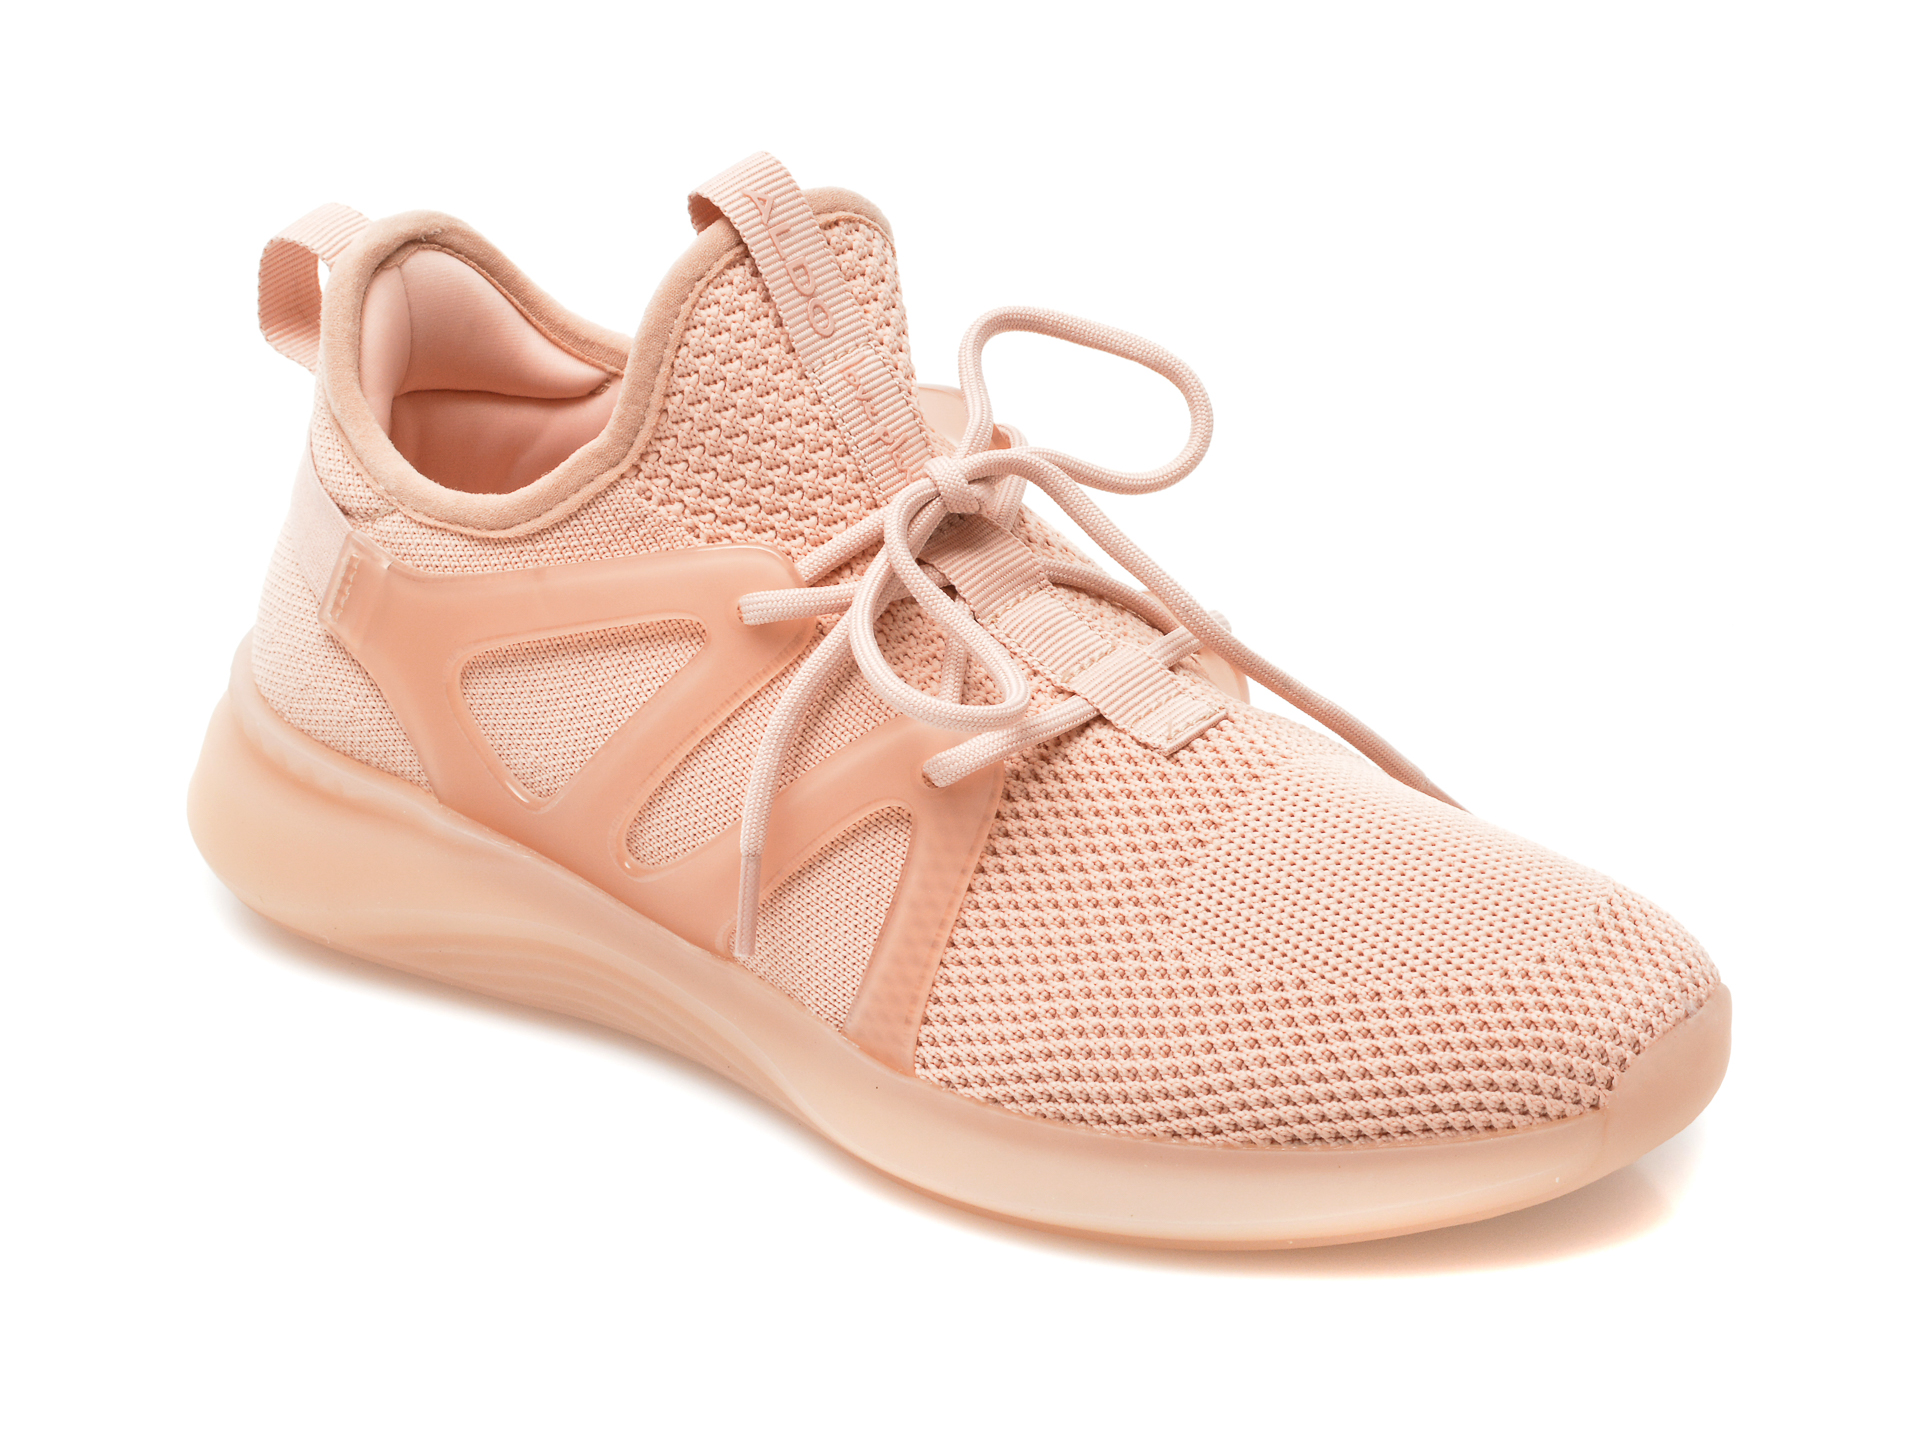 Pantofi sport ALDO roz, Rpplfrost1B680, din material textil Aldo Aldo